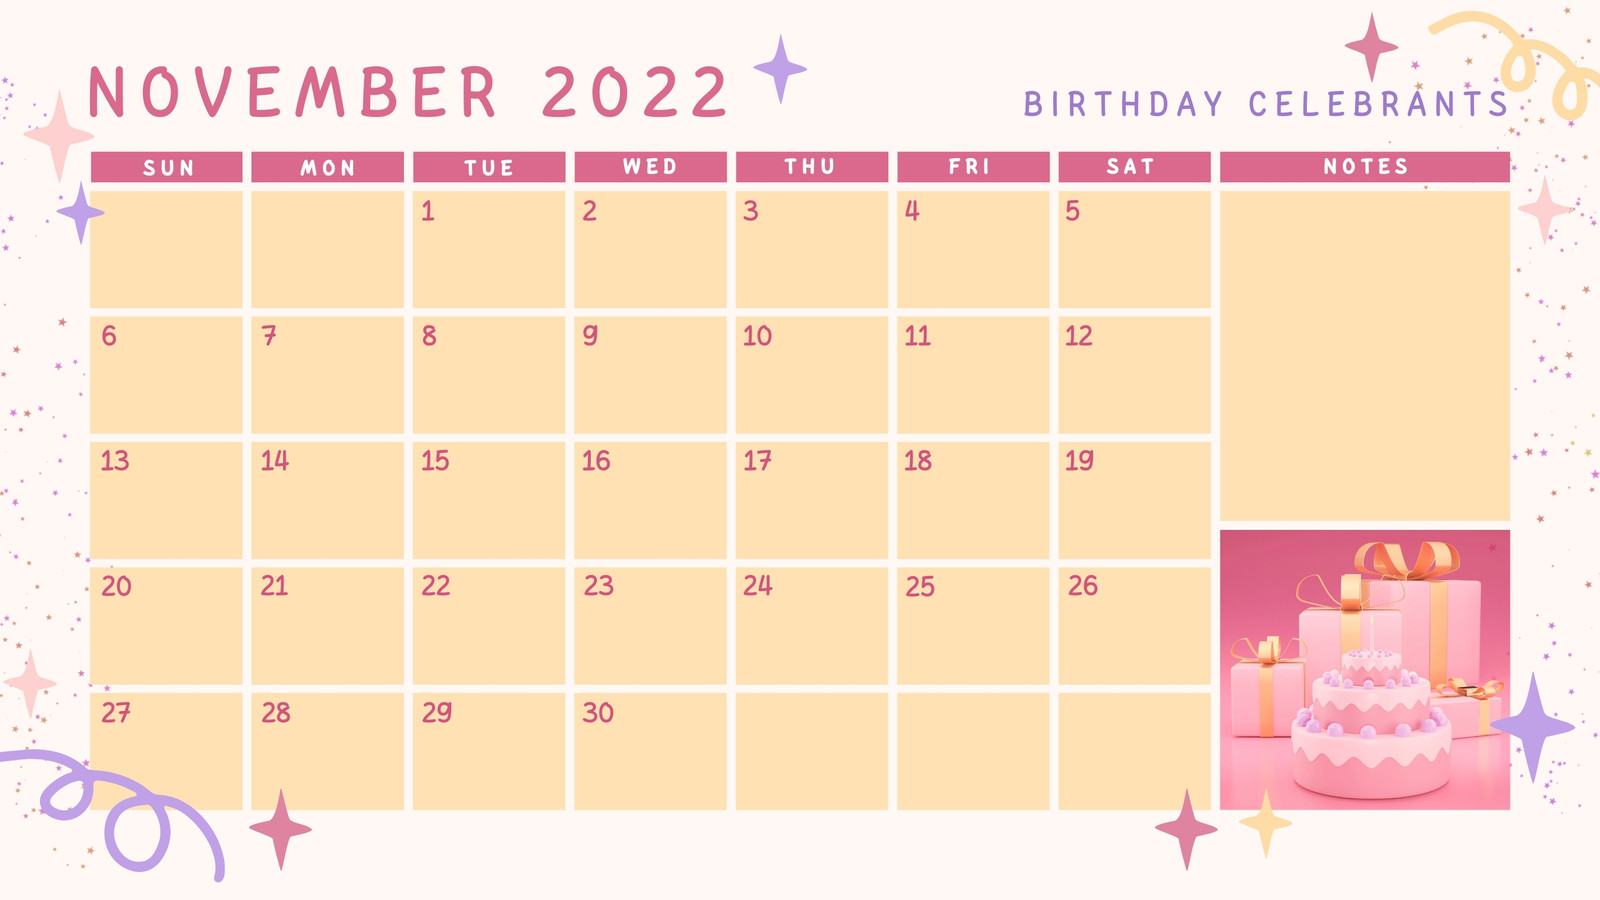 Free, printable, customizable birthday calendar templates